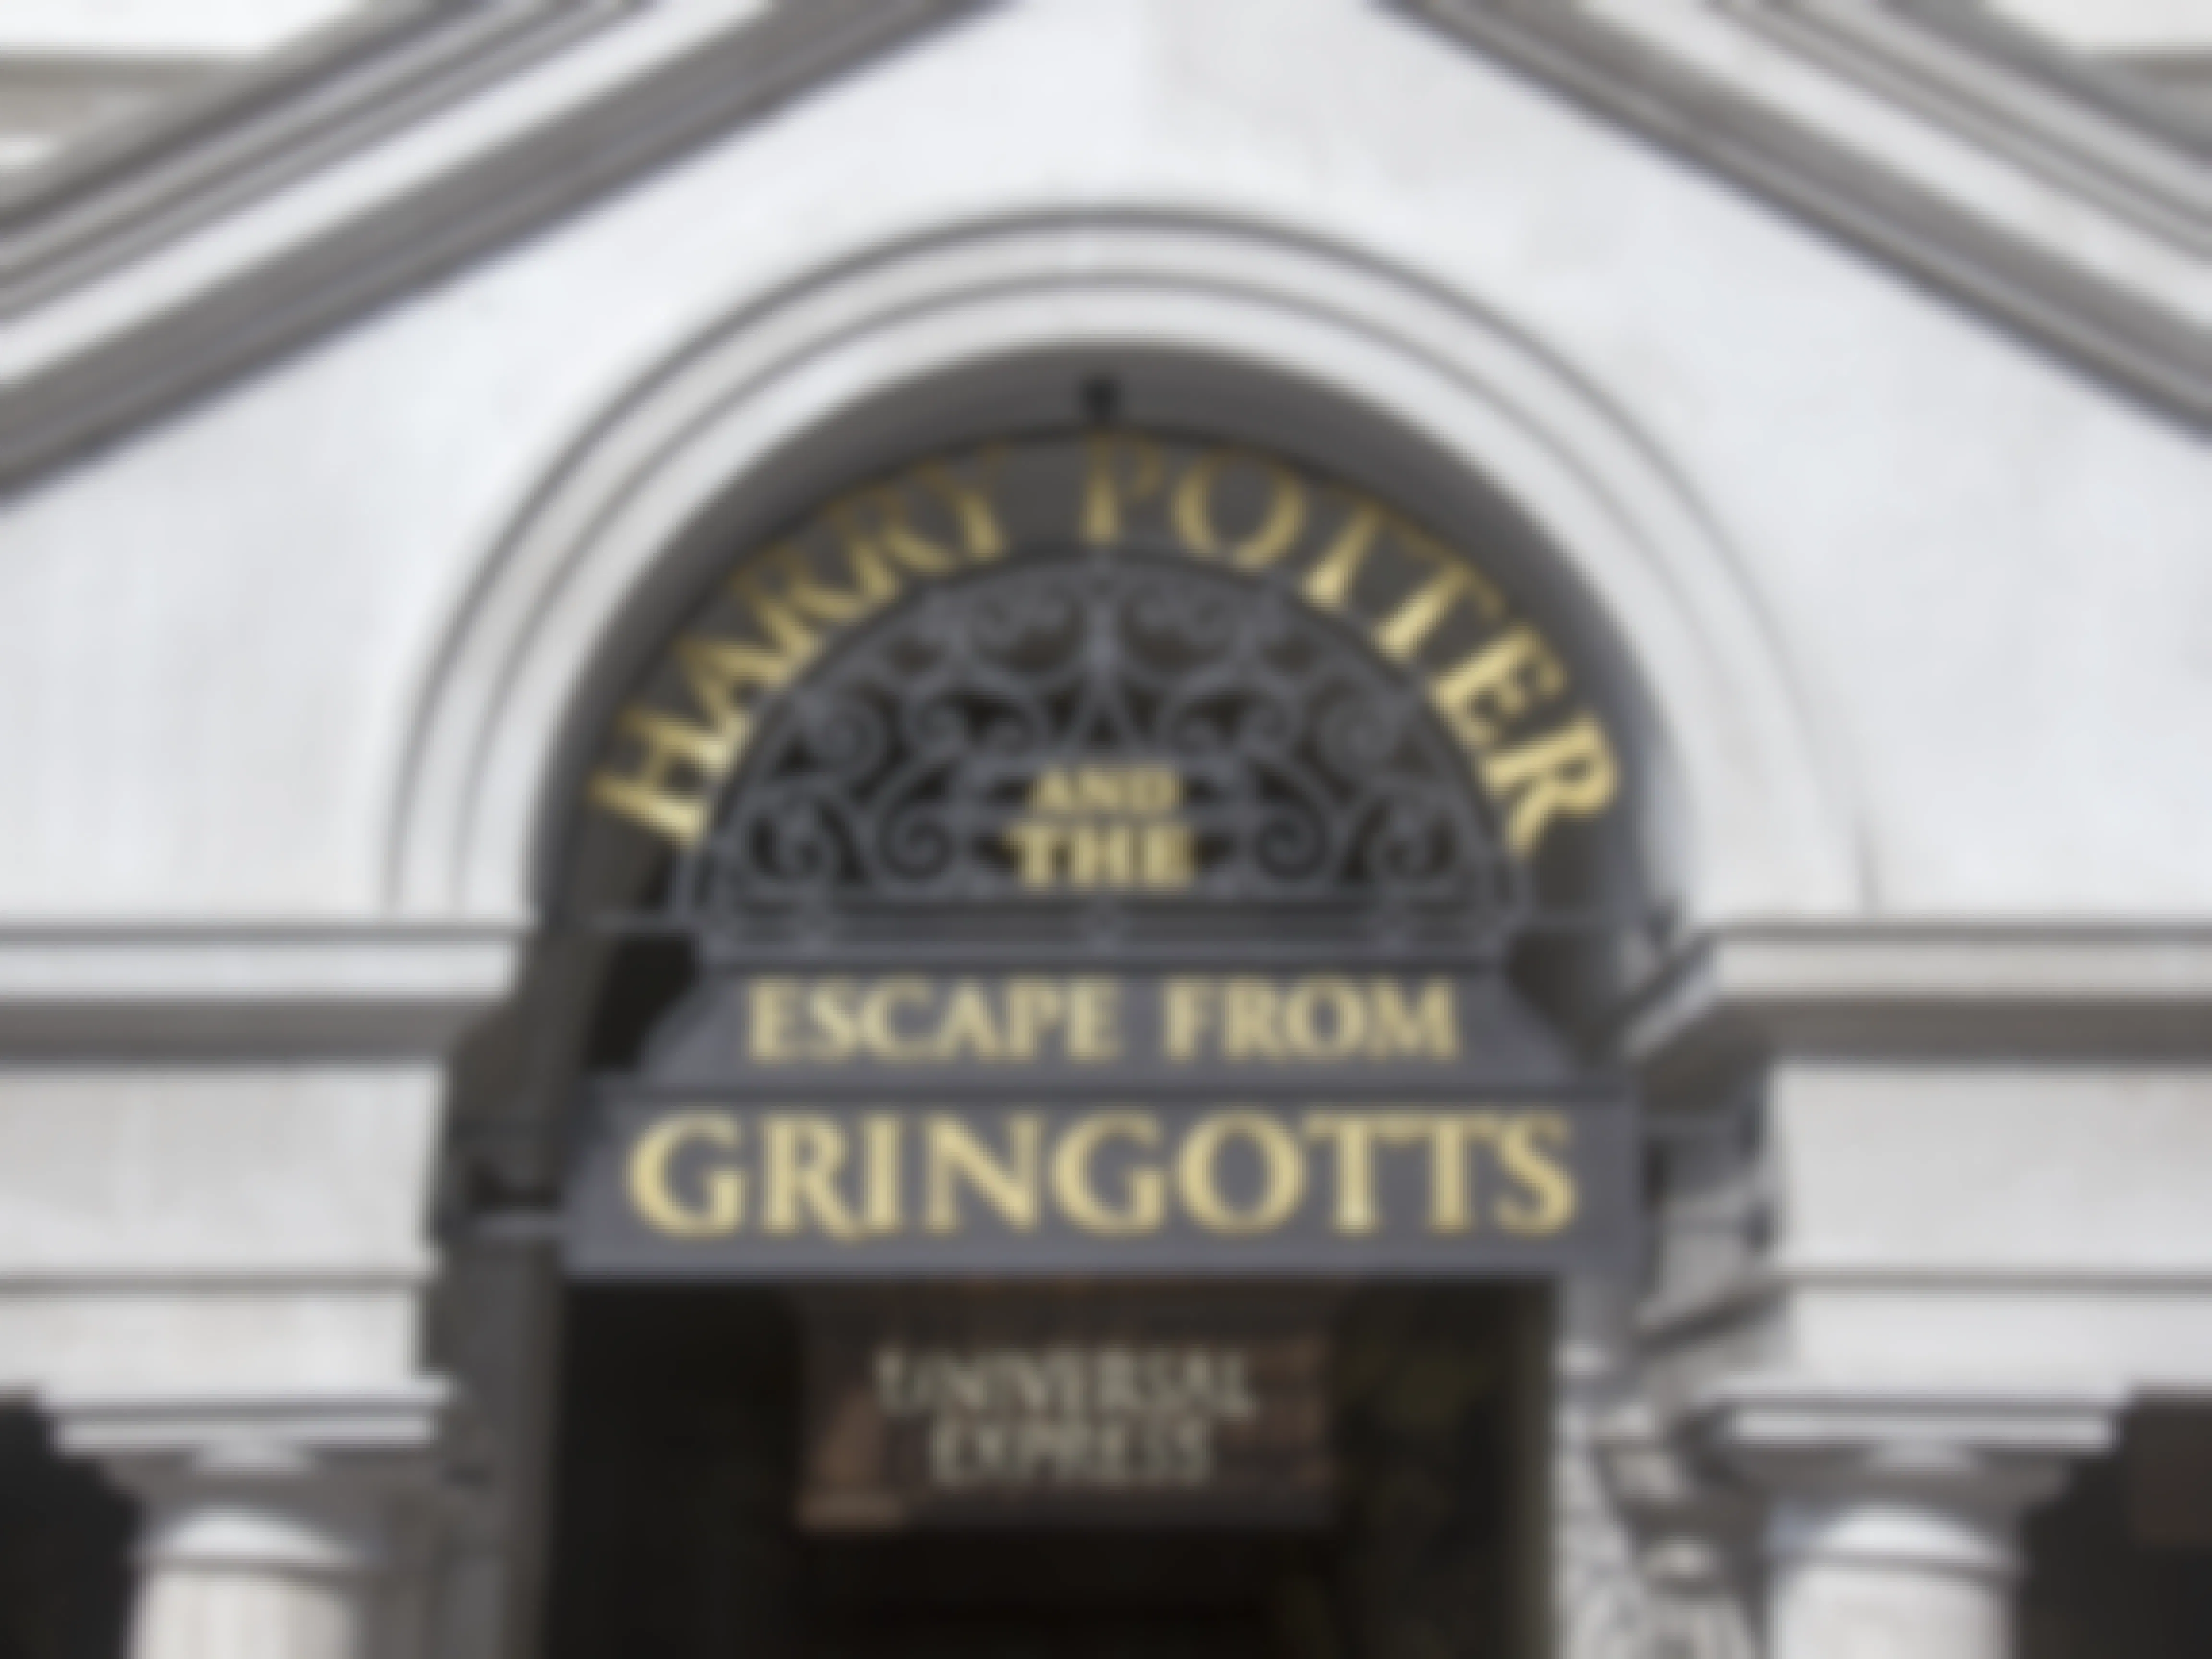 Entrance sign to Harry Potter Escape from Gringotts Universal Studios